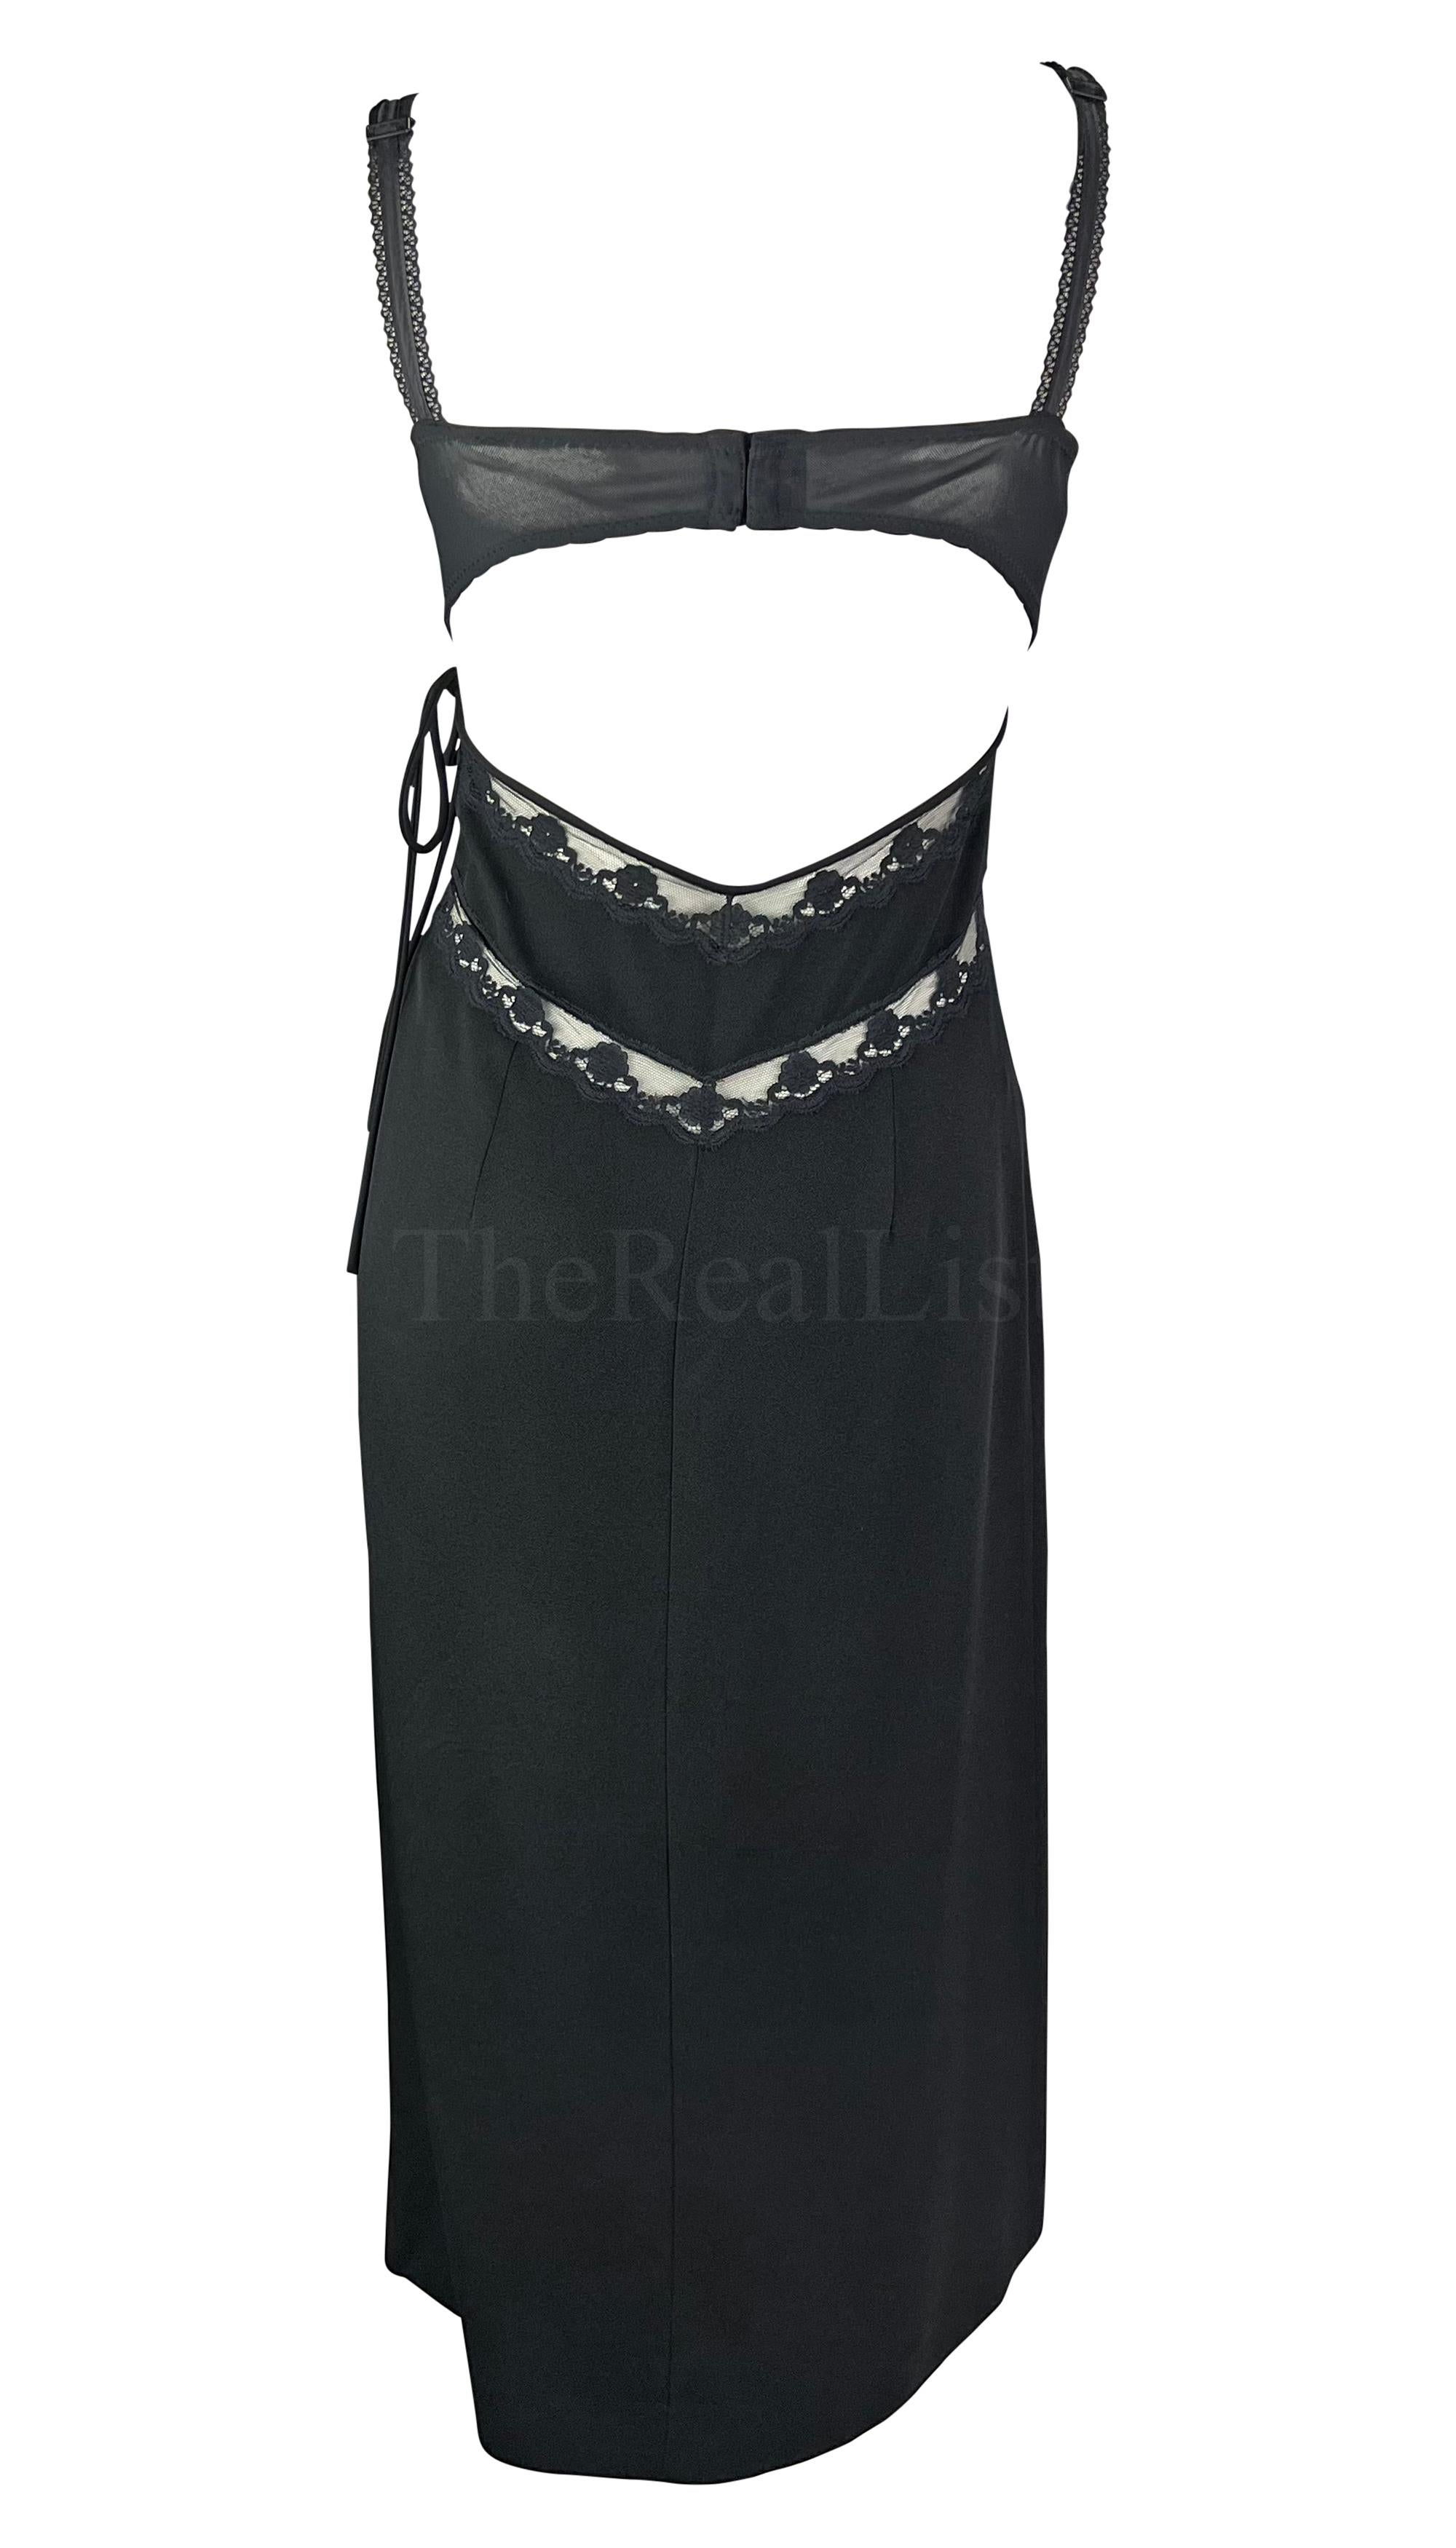 Women's S/S 1997 Dolce & Gabbana Sheer Black Lace Bustier Stretch Cutout Slip Dress For Sale